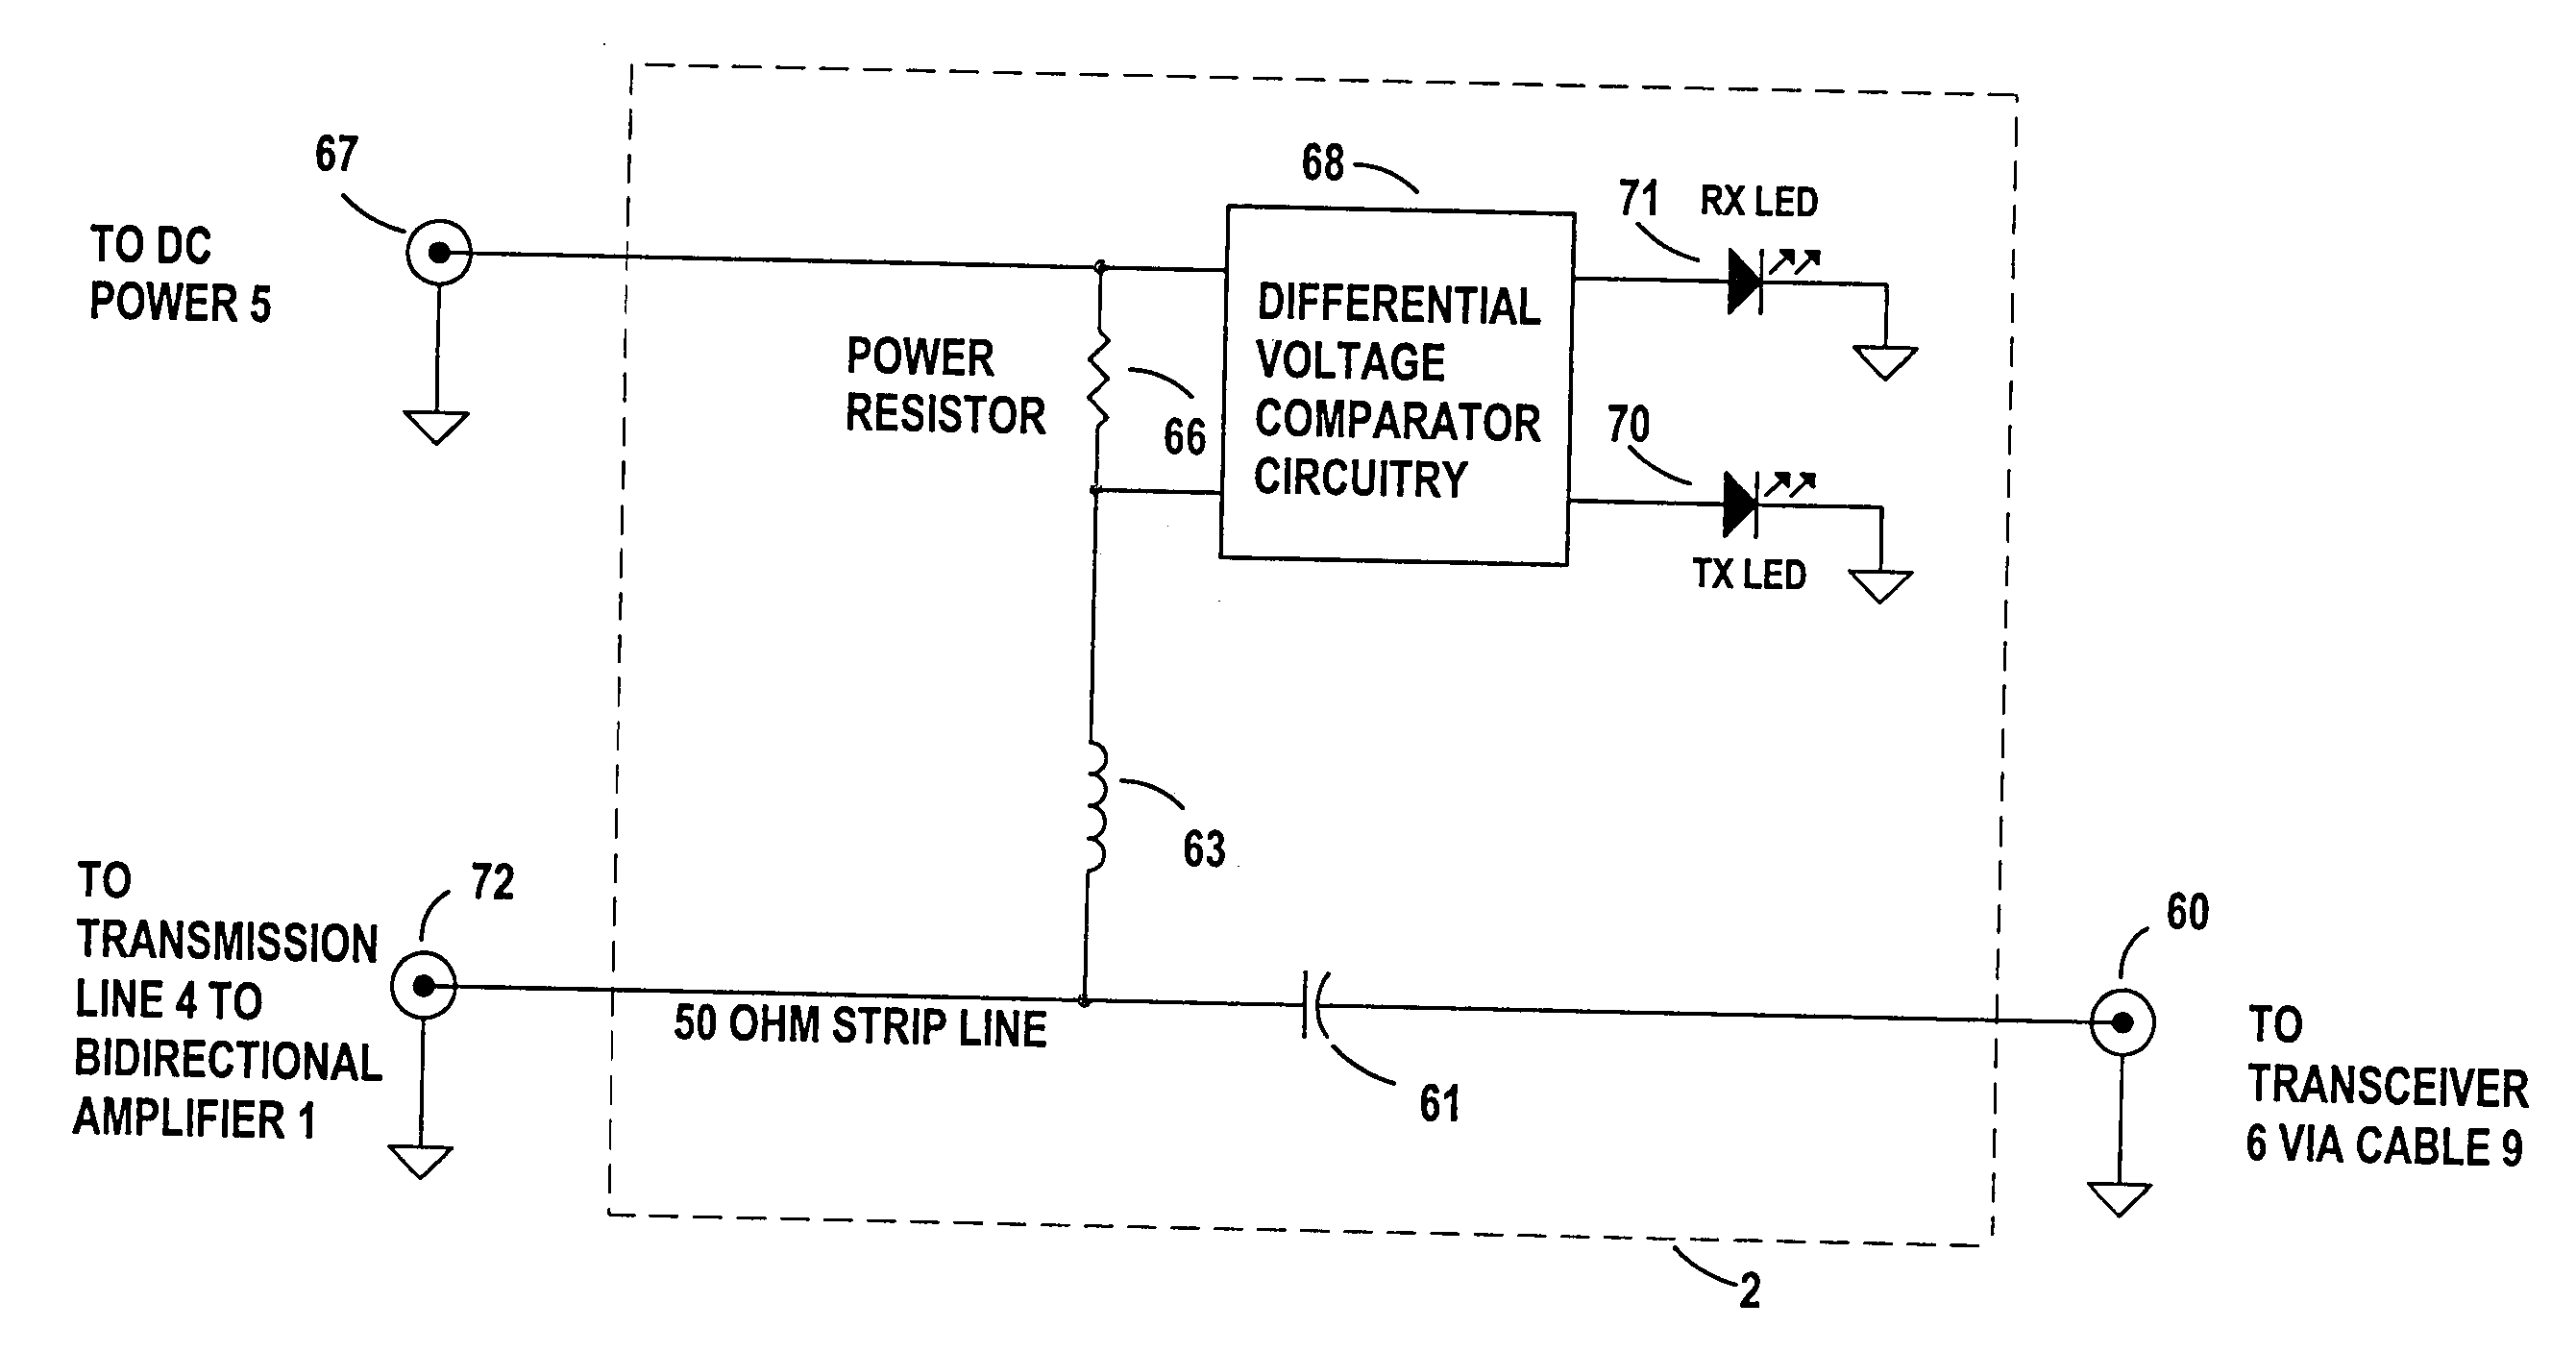 Temperature compensated RF circuitry